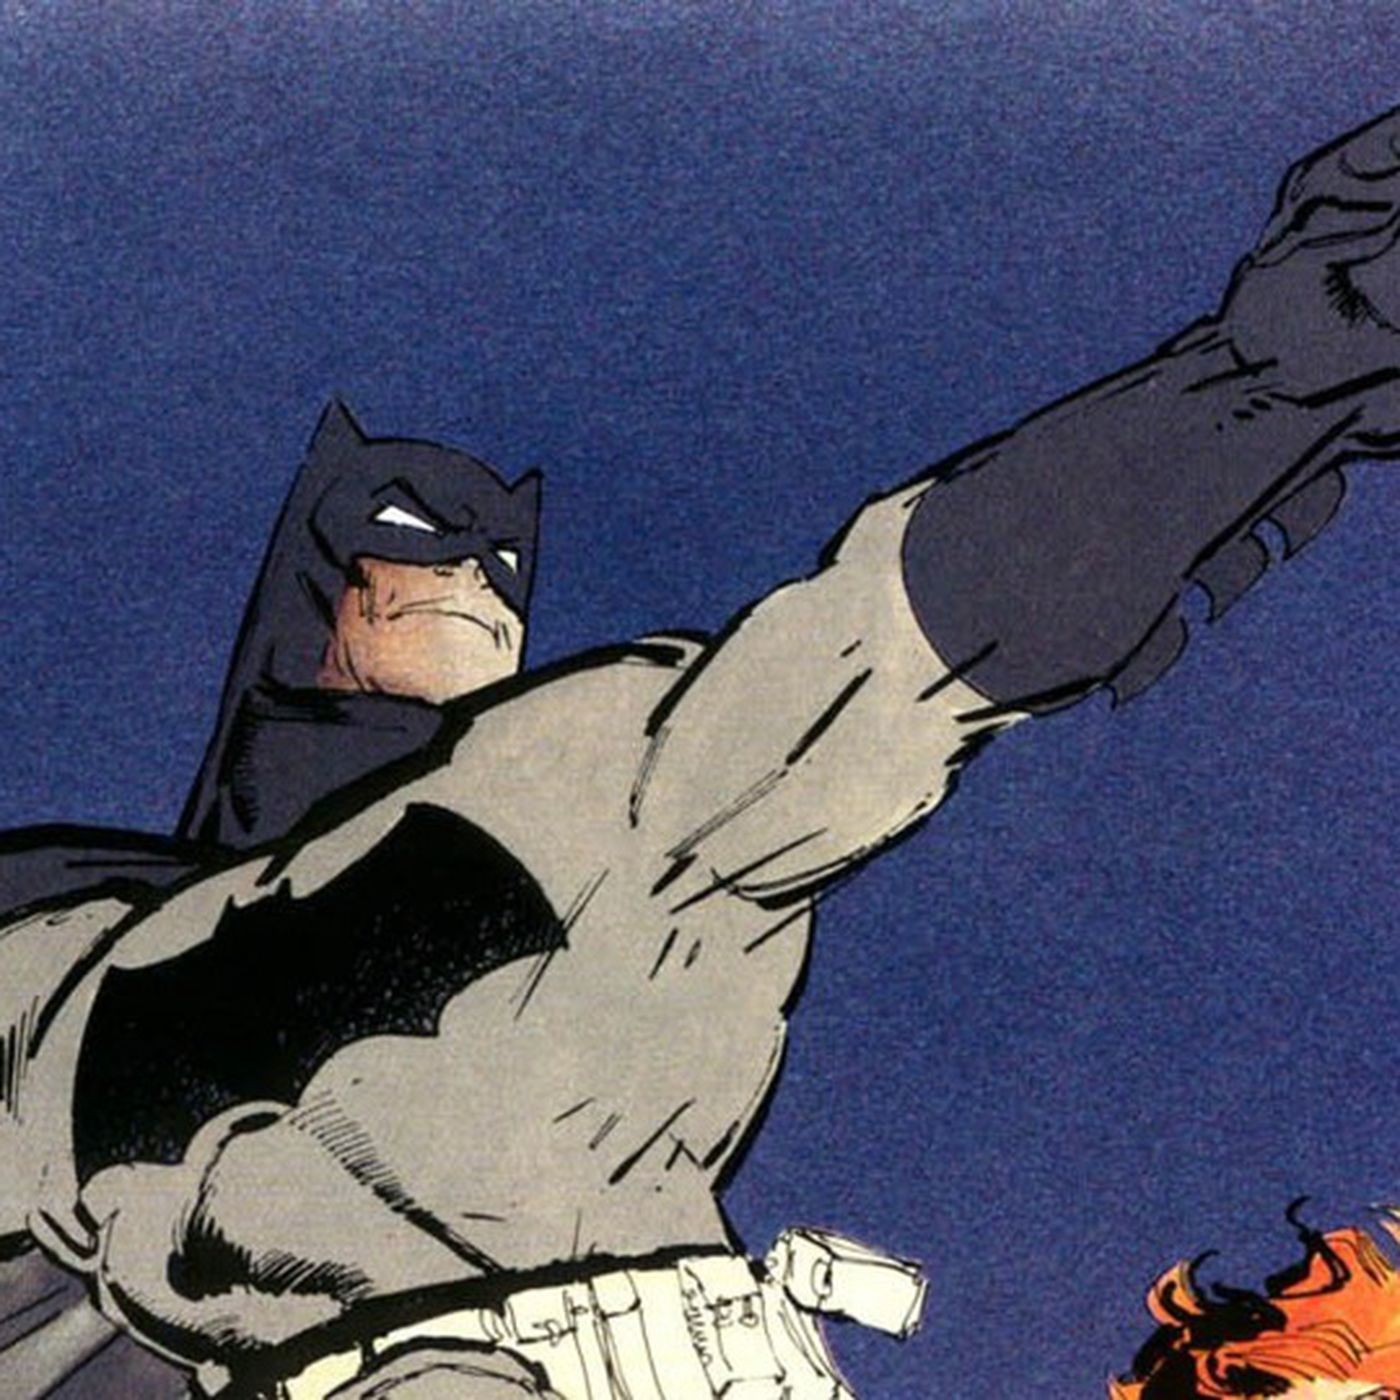 What is Batmans greatest weakness?